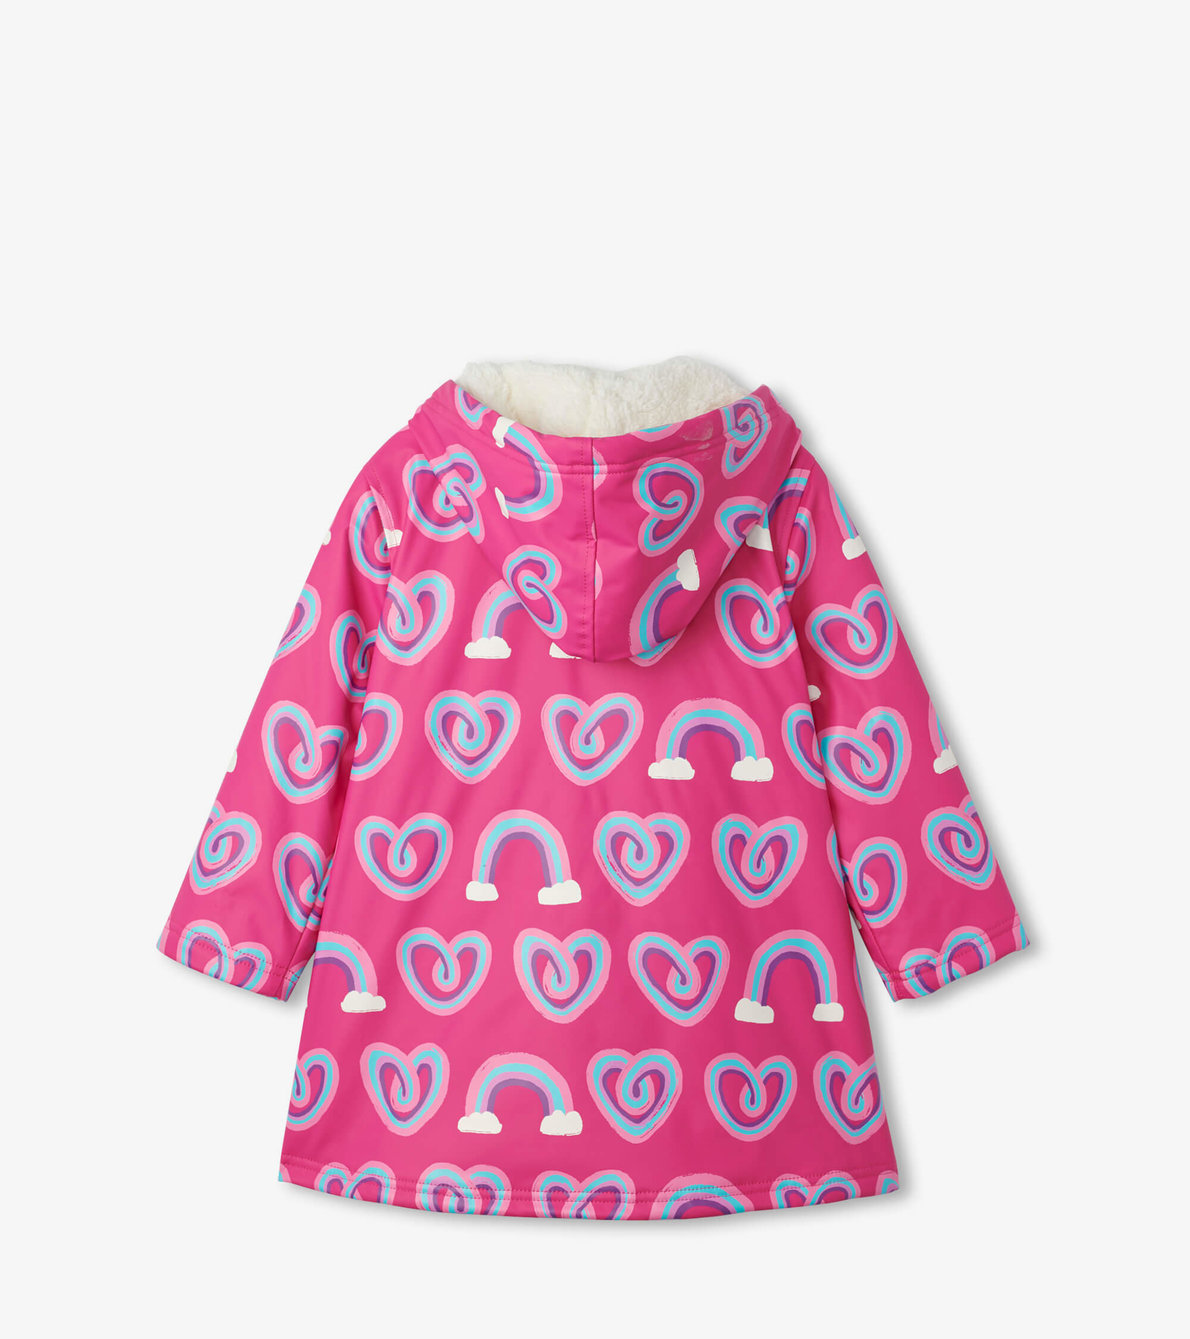 View larger image of Twisty Rainbow Hearts Sherpa Lined Splash Jacket